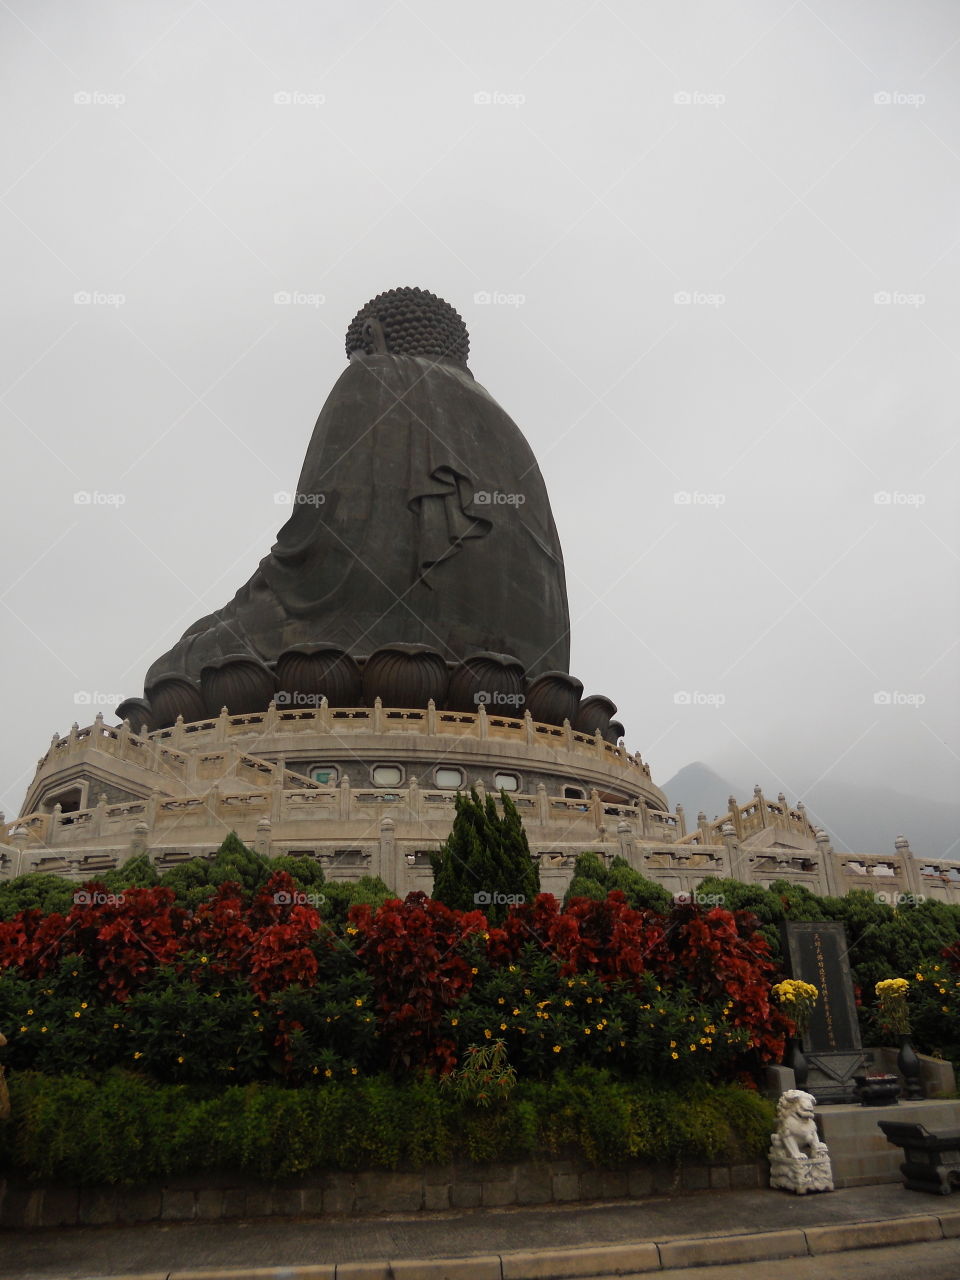 The Big Buddha (Tian Tan) on Lantau island Hong Kong seen from behind